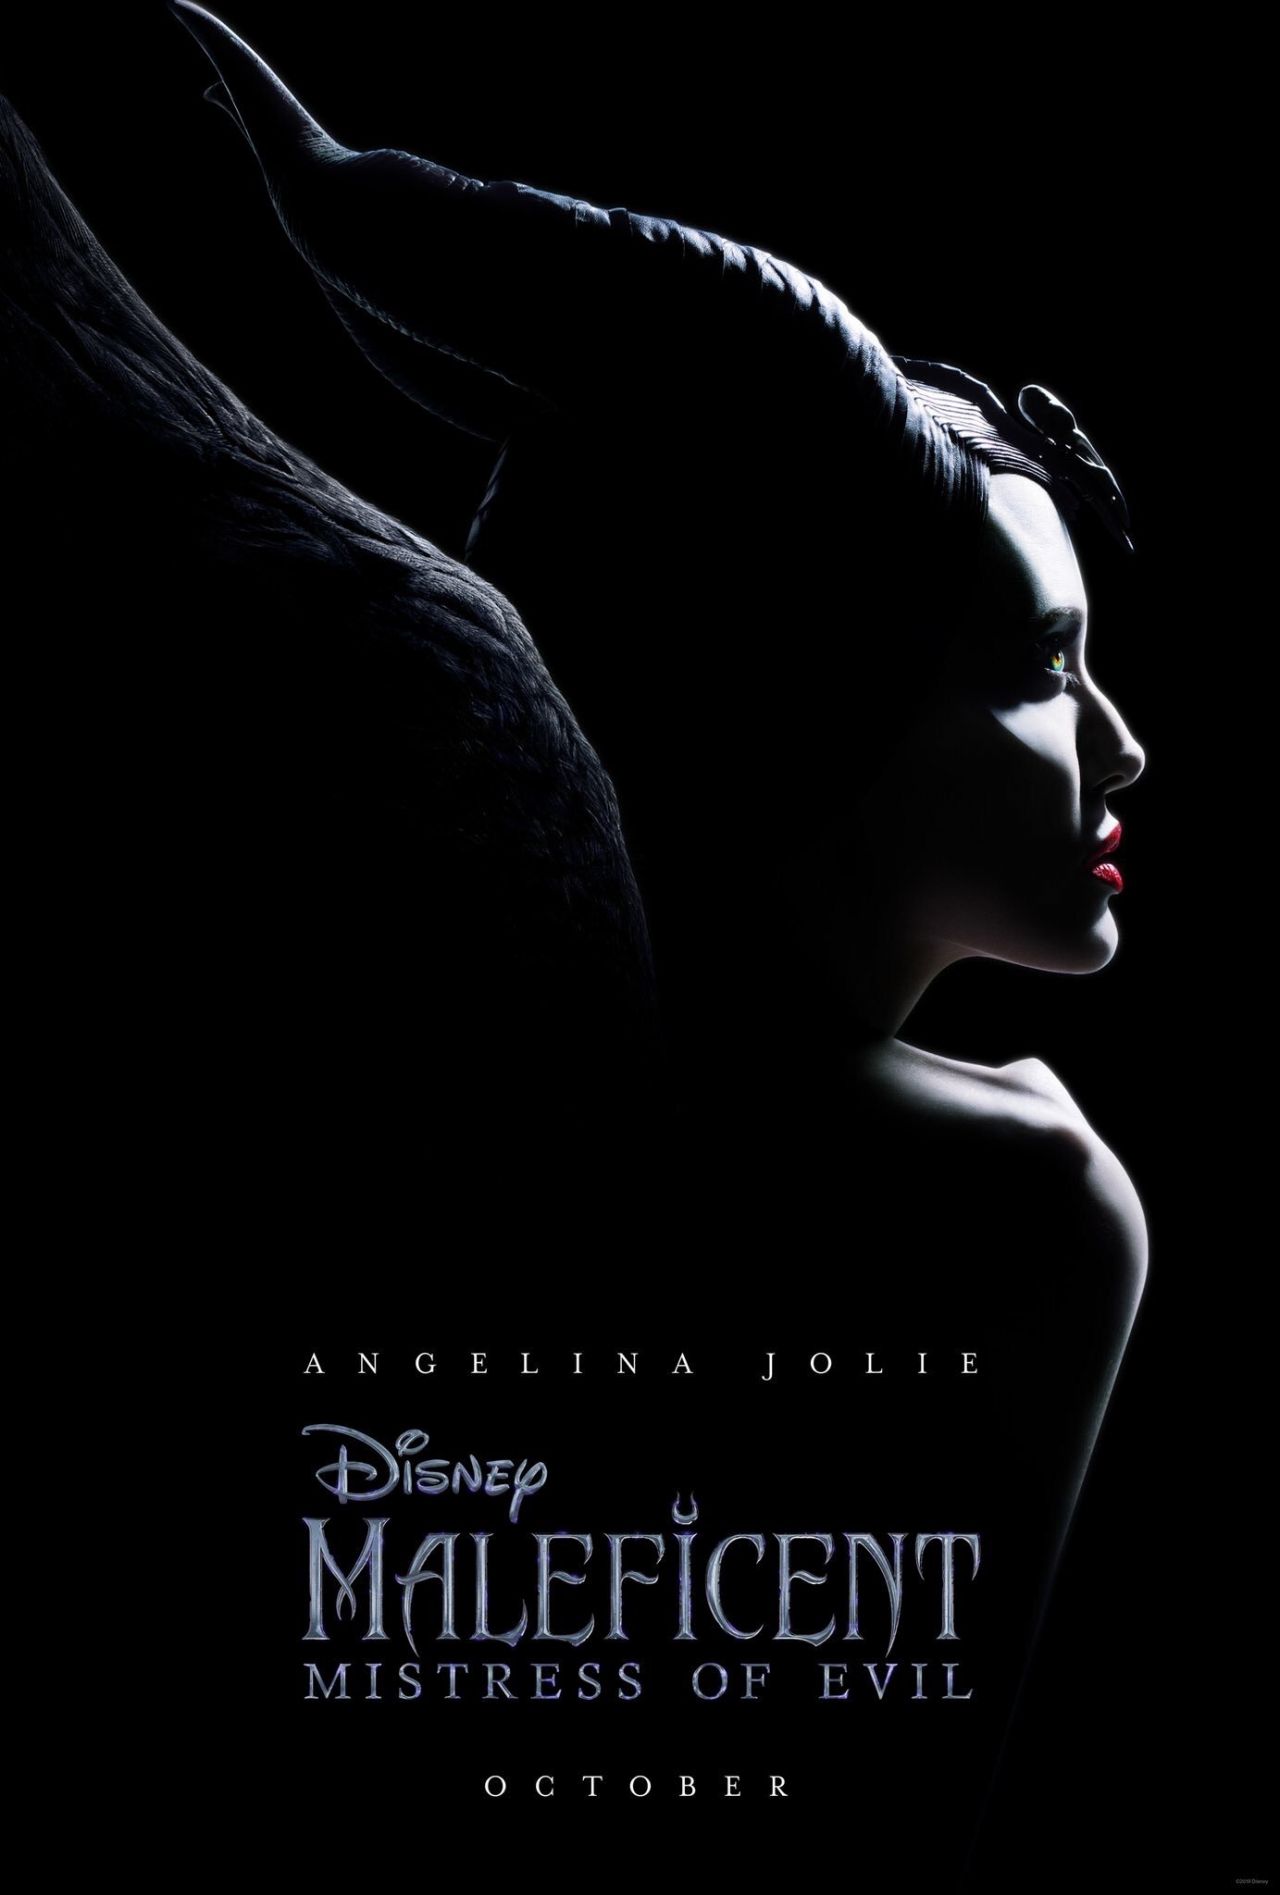 https://celebmafia.com/wp-content/uploads/2019/05/angelina-jolie-maleficent-mistress-of-evil-2019-posters-0.jpg